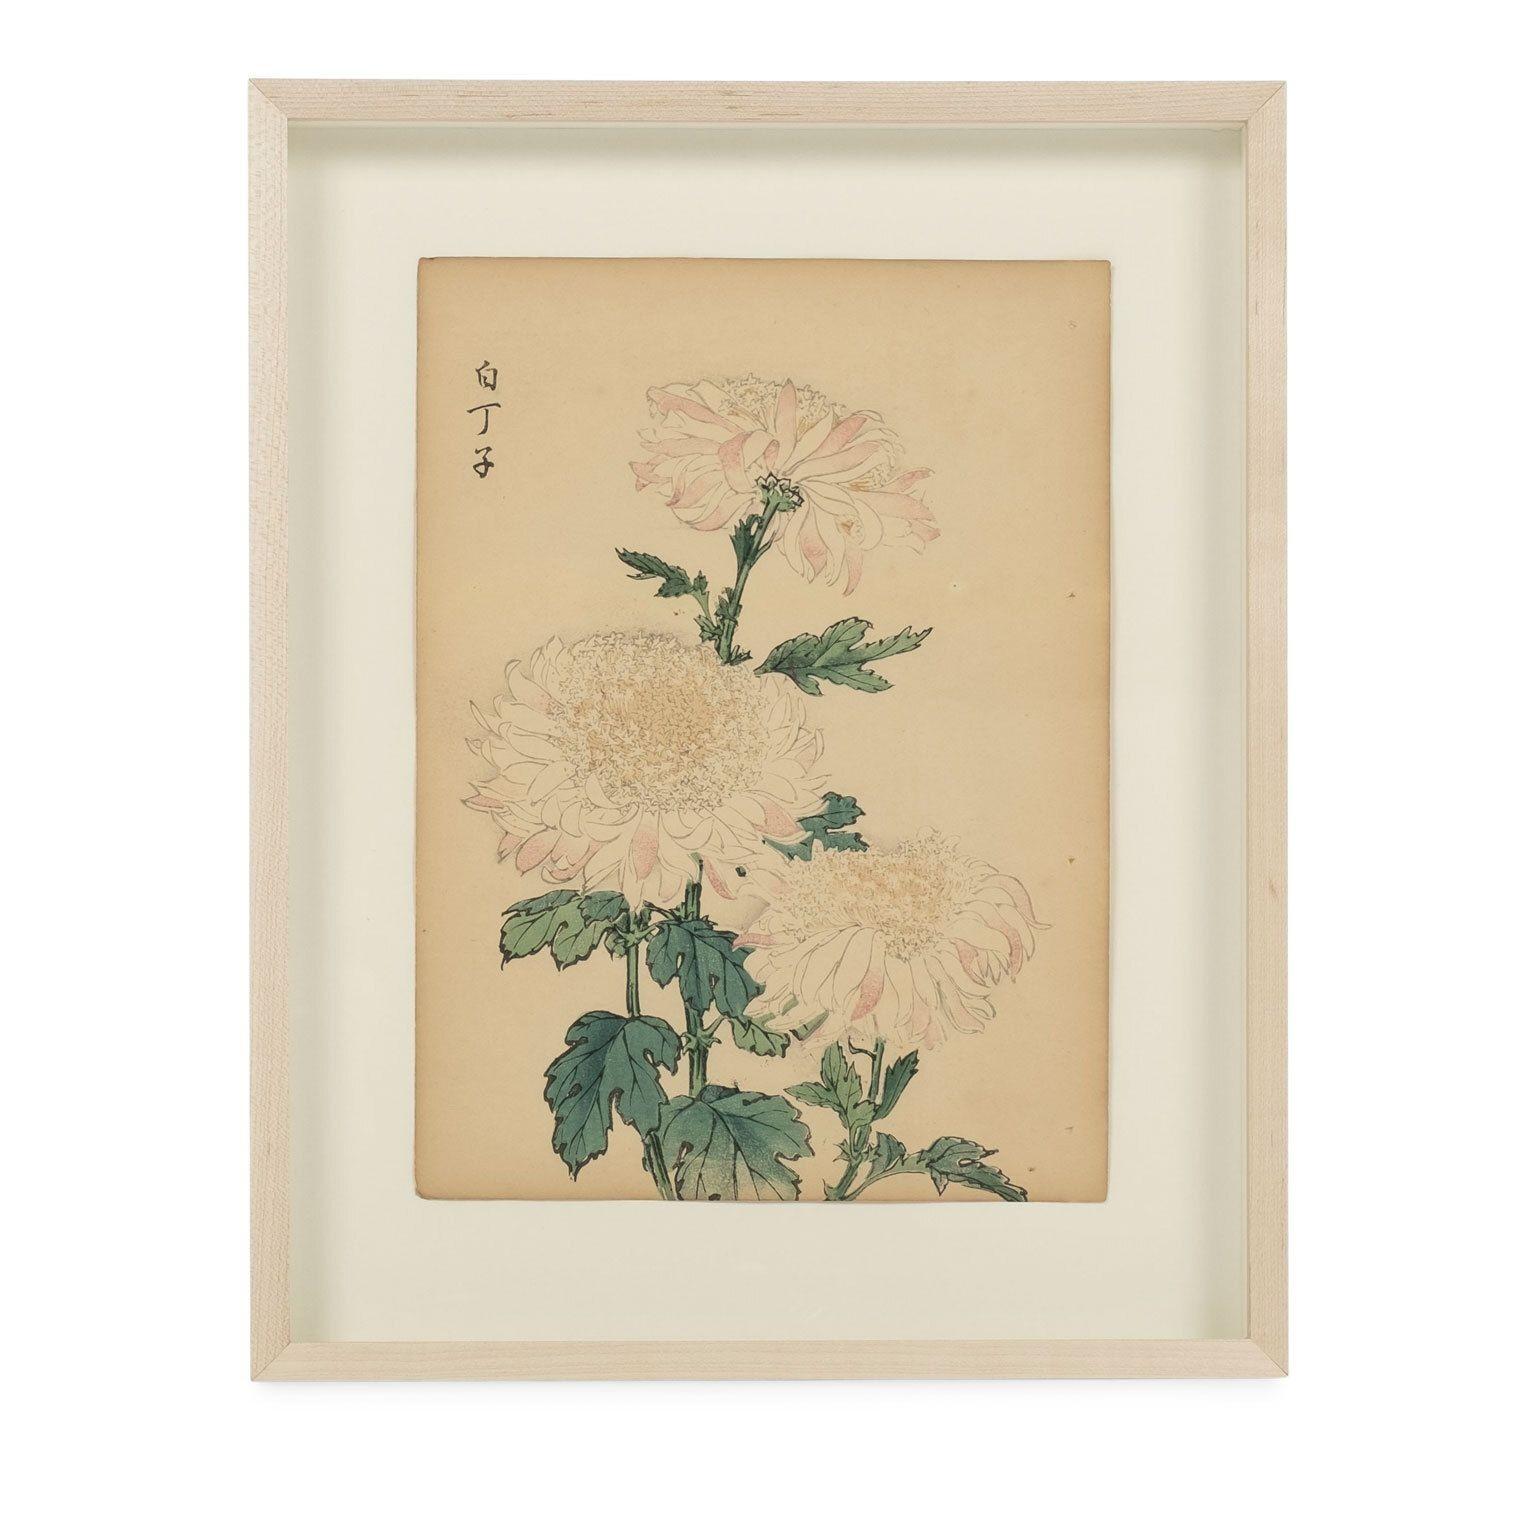 Set of Nine vintage original woodblock chrysanthemum prints on washi paper, by late 19th century artist Keika Hasegawa. Printed in 1954 as part of a bound three volume set titled 